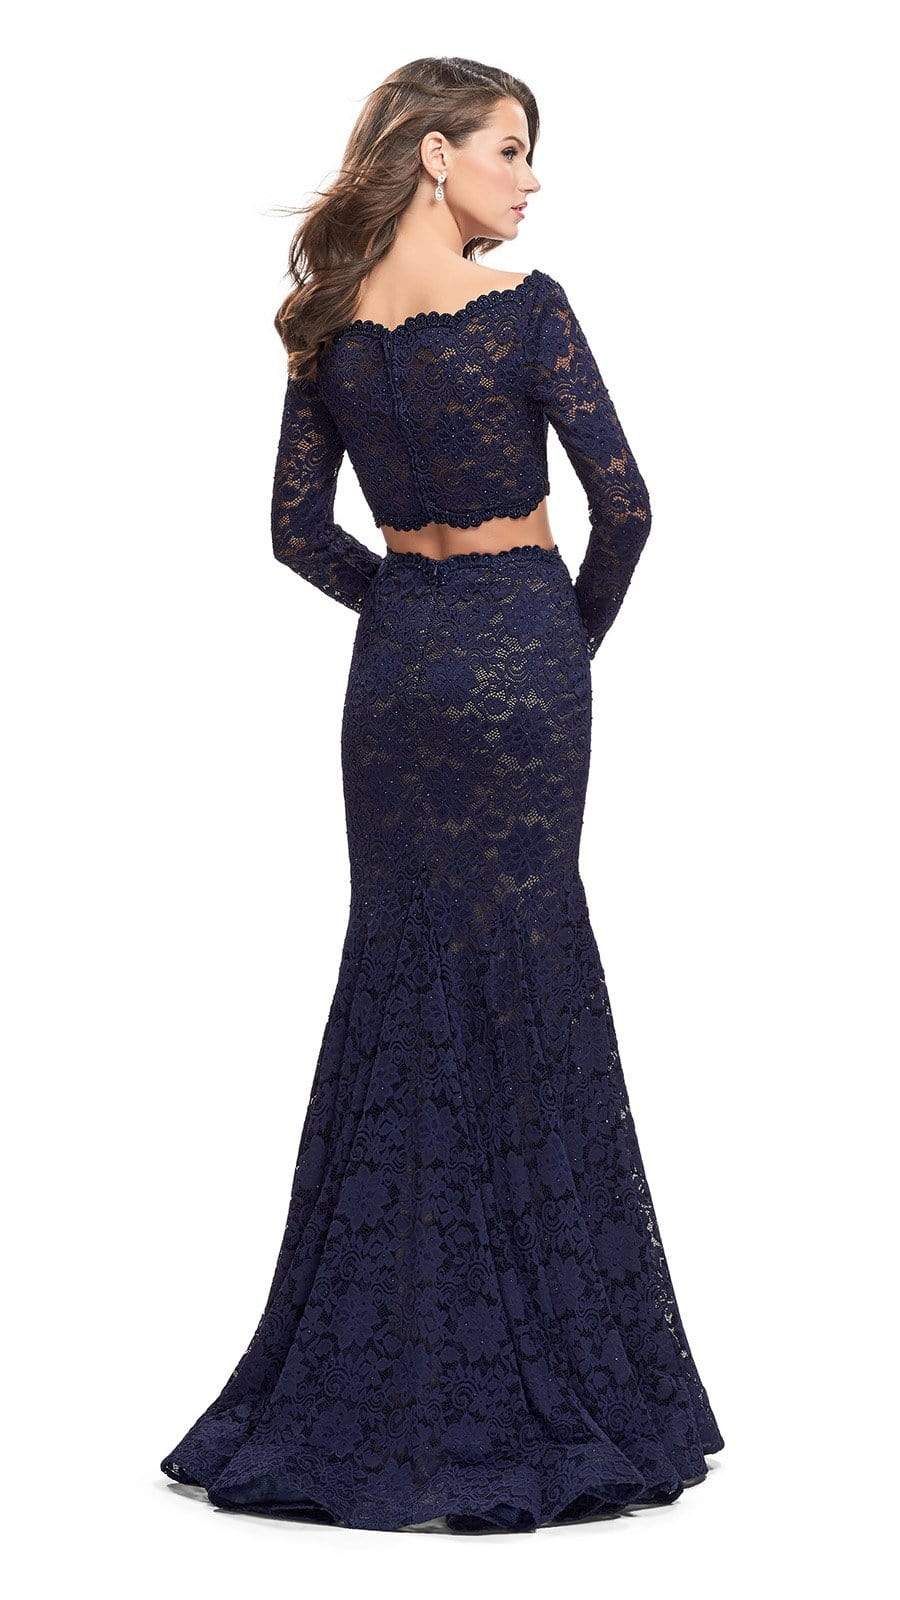 La Femme - Two Piece Lace Mermaid Dress 25668SC - 1 pc Navy In Size 8 Available CCSALE